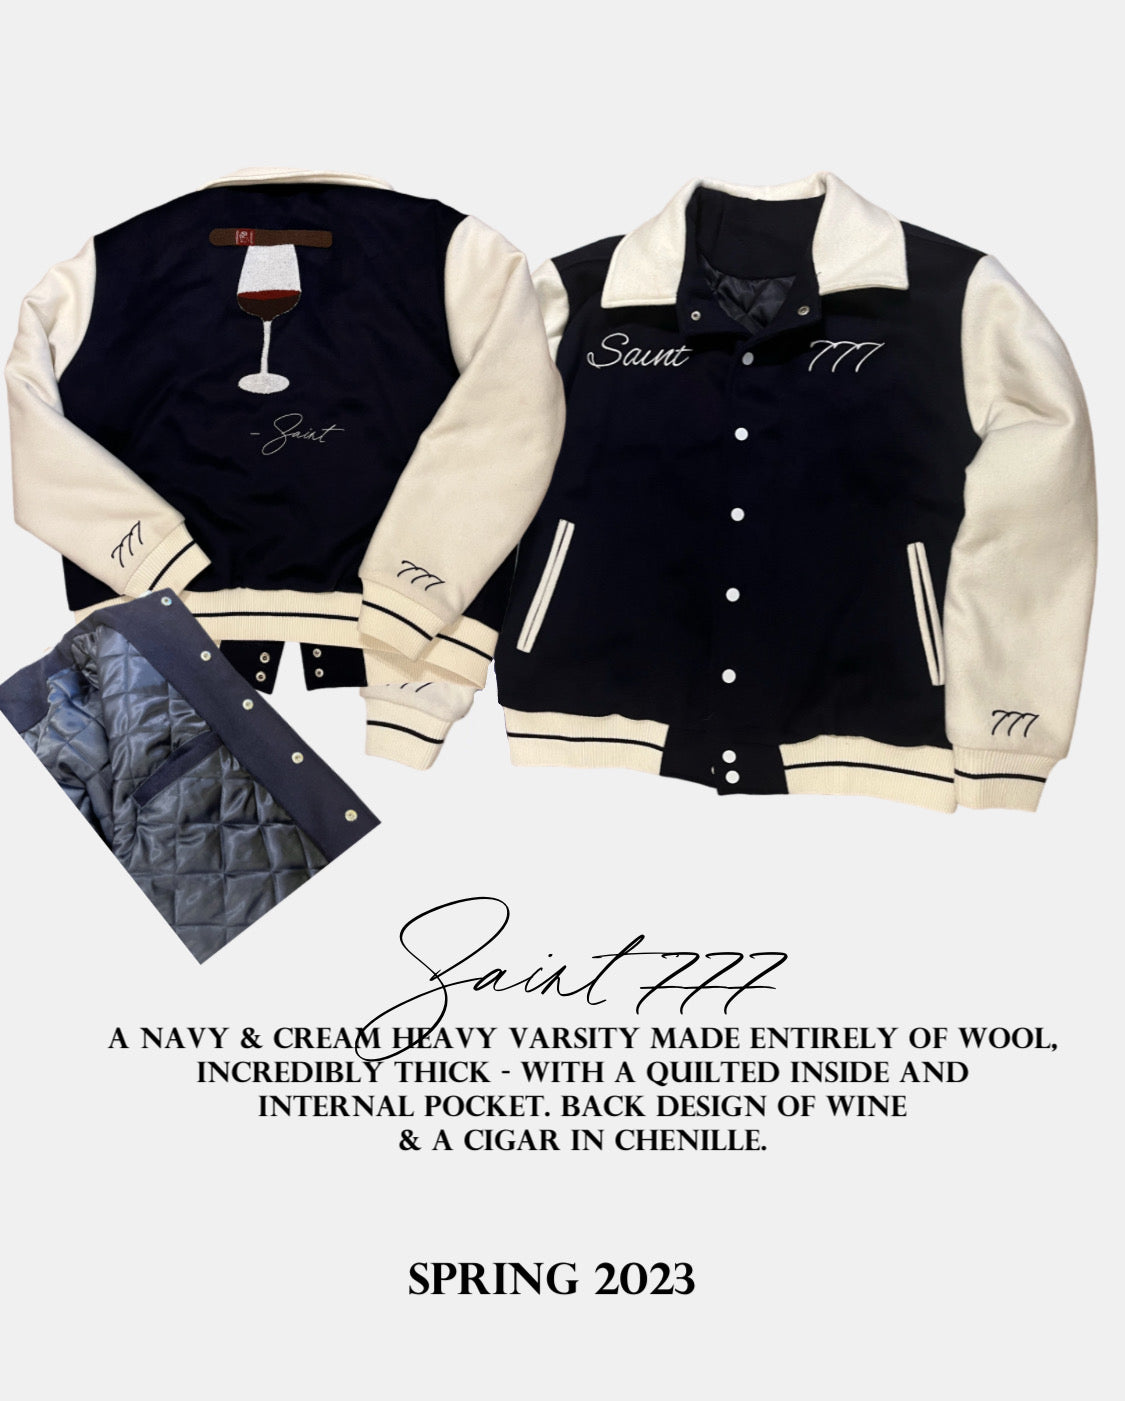 Louis Vuitton Fragment Varsity Jacket